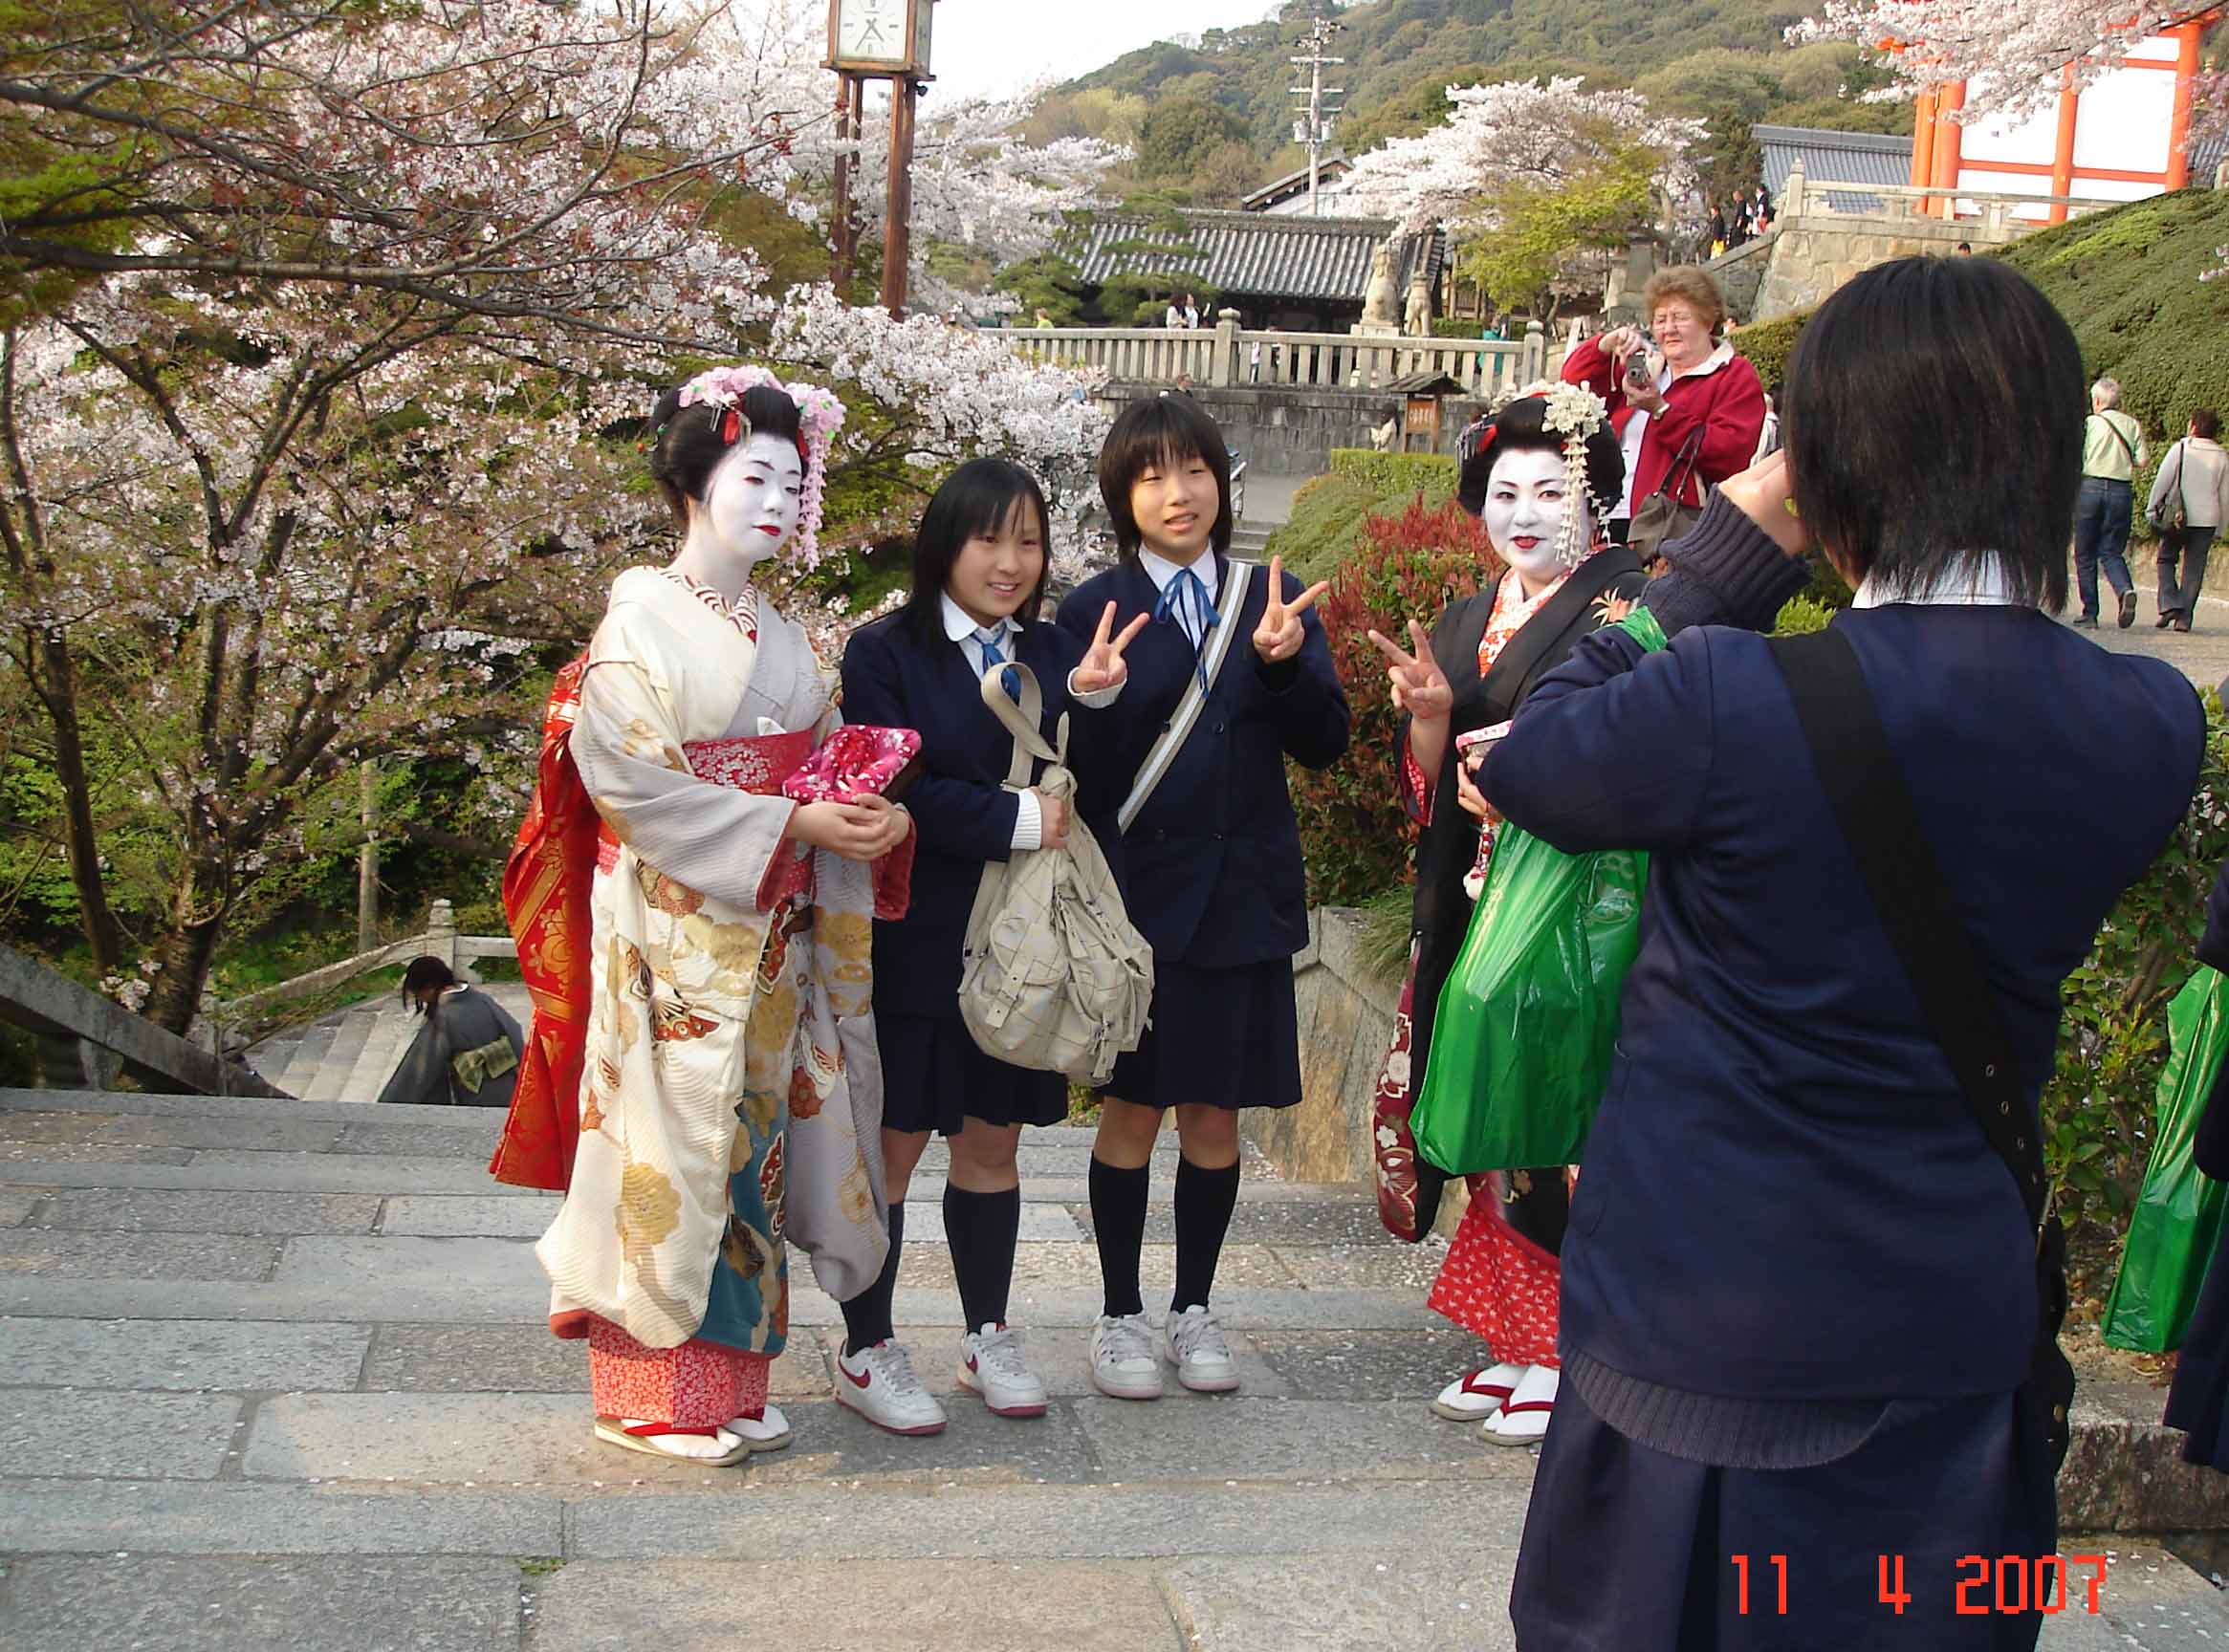 Kiyhomizu-Maiko women and young students - Kiyhomizu -Temple of Buddhism 